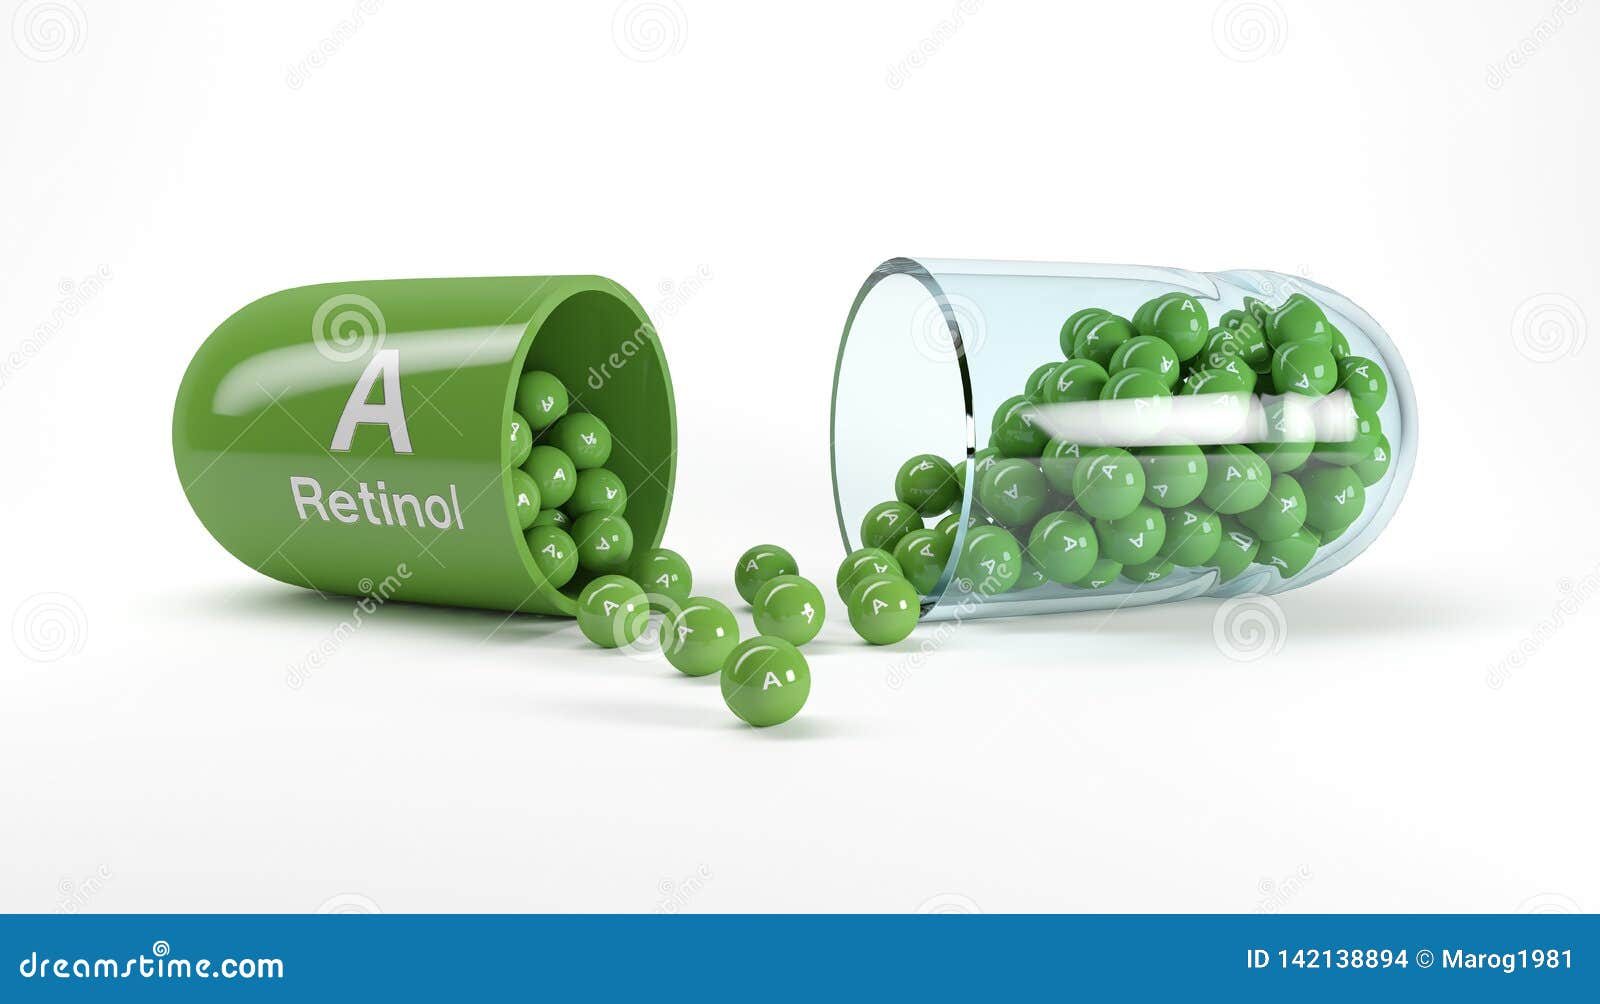 3d rendering of a vitamin capsule with vitamin a - retinol